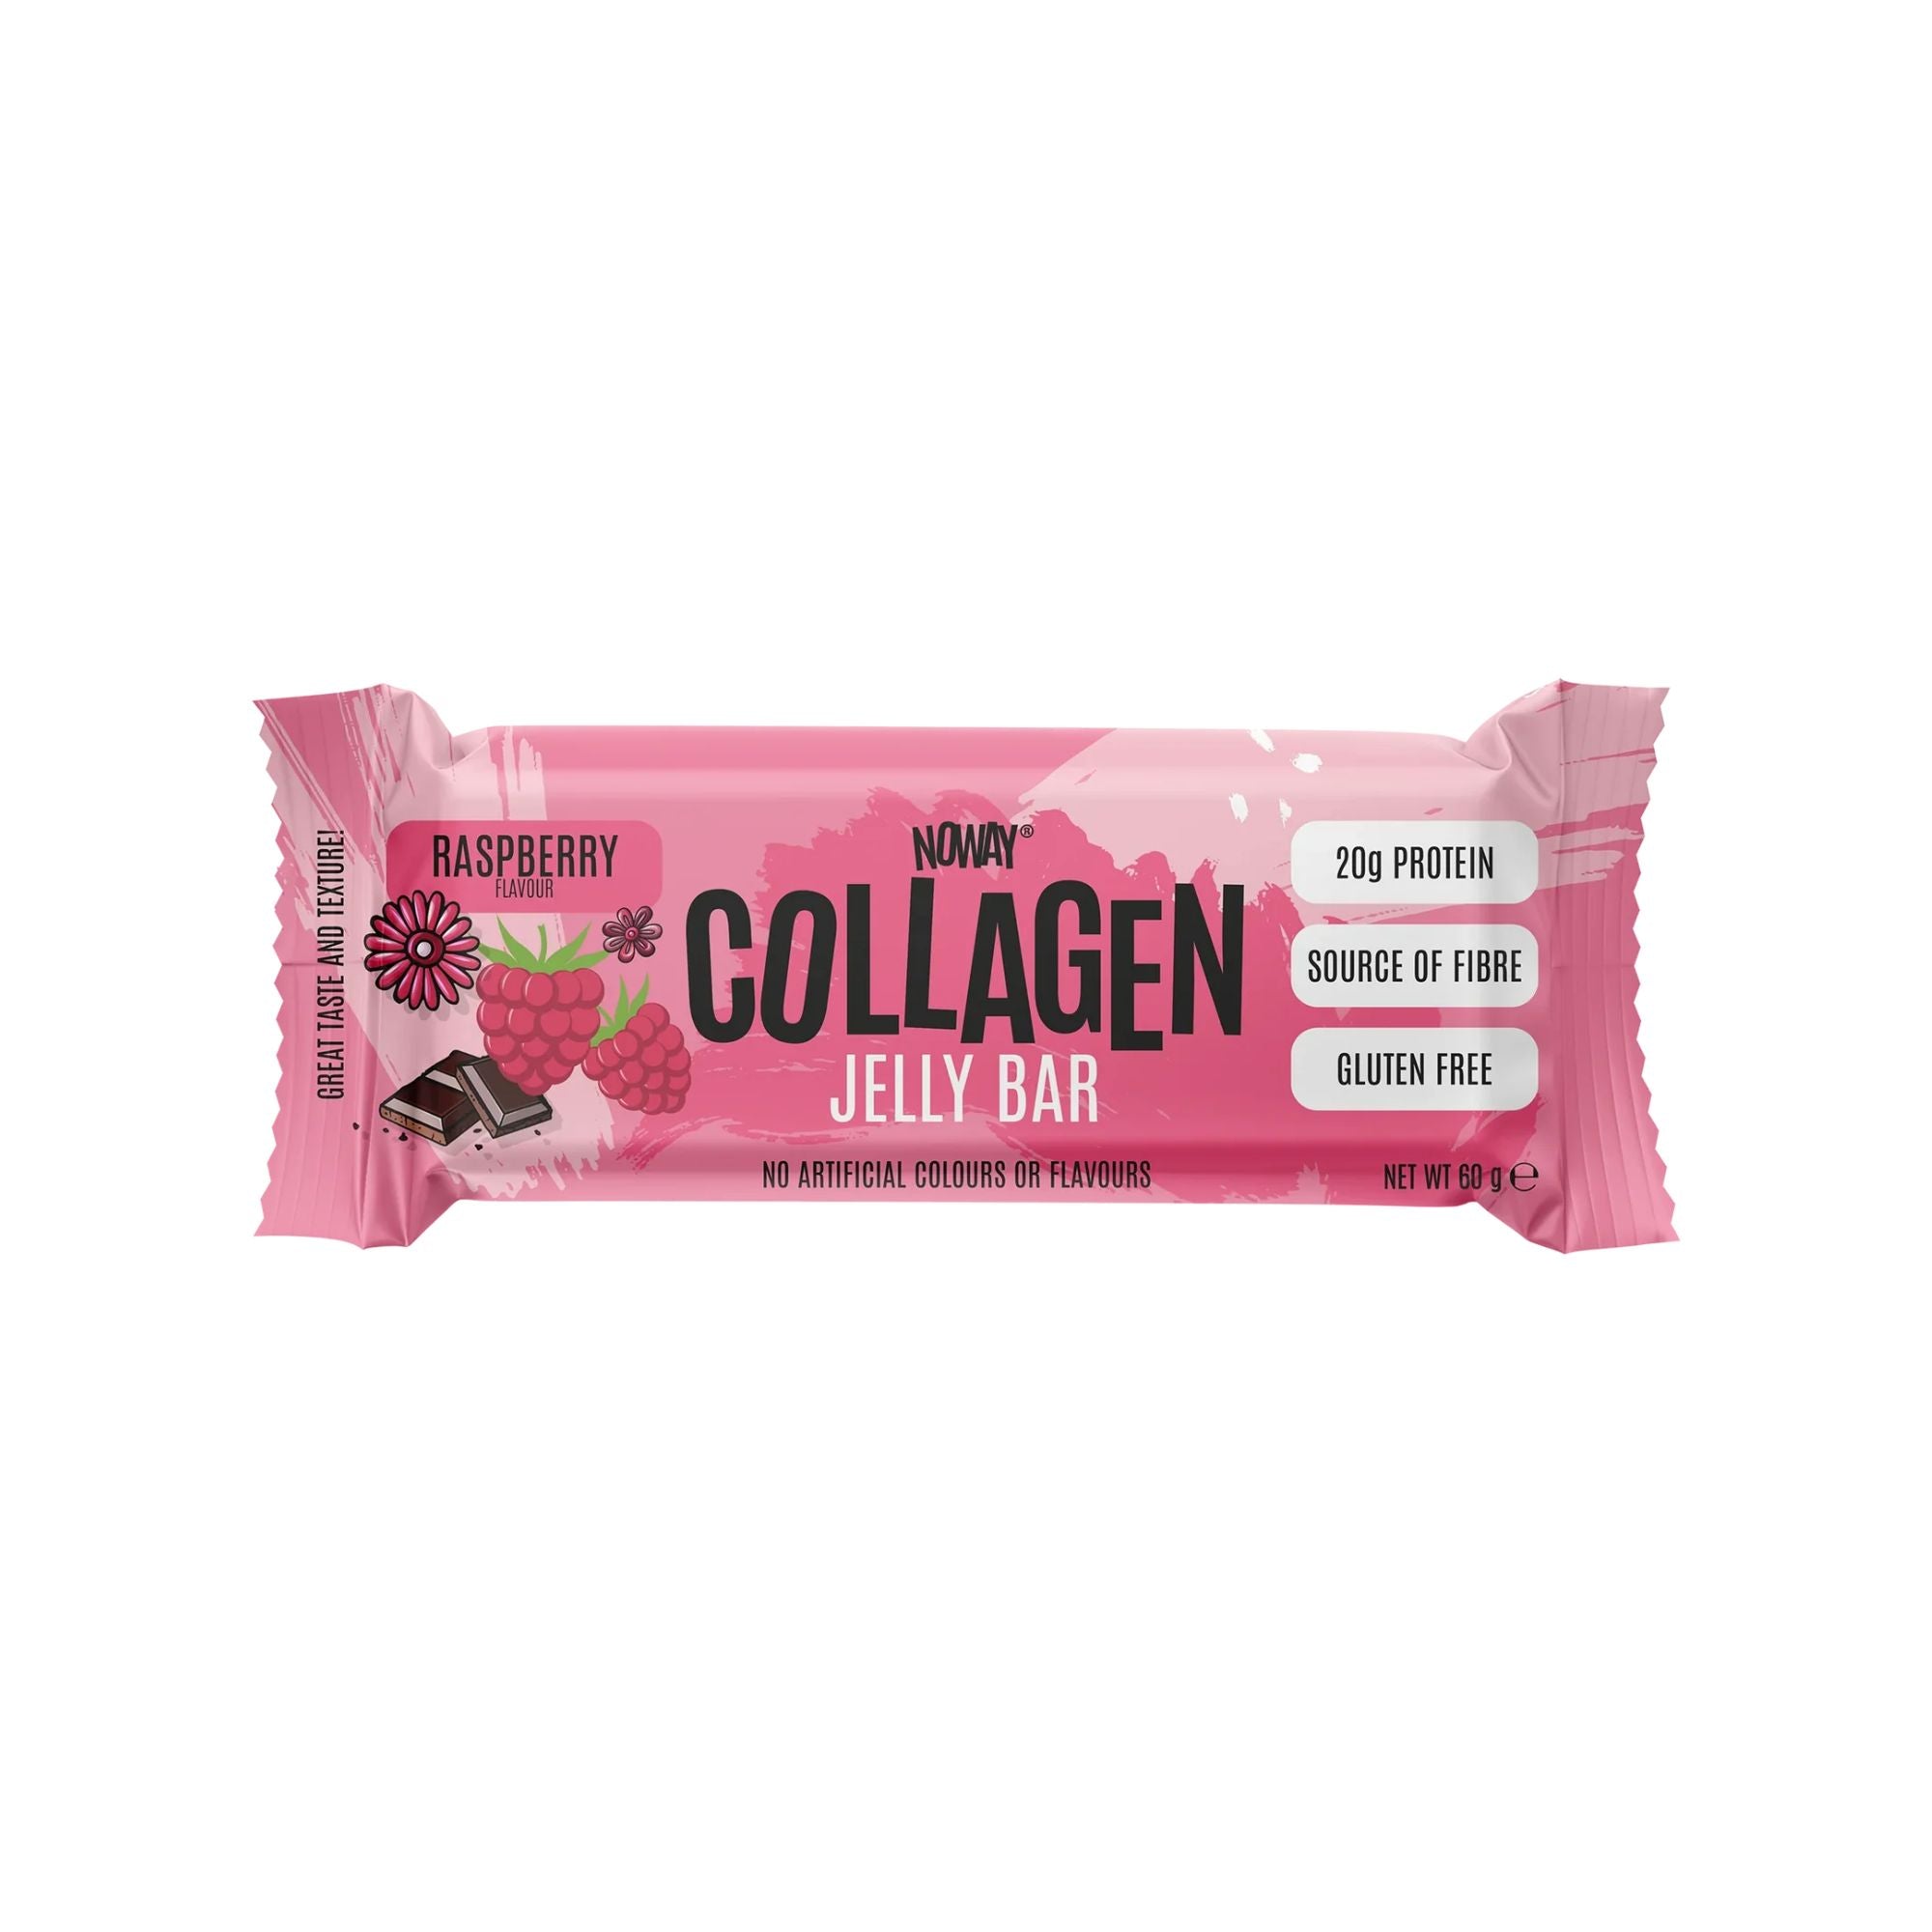 ATP Noway Collagen Jelly Bar 60g - Raspberry